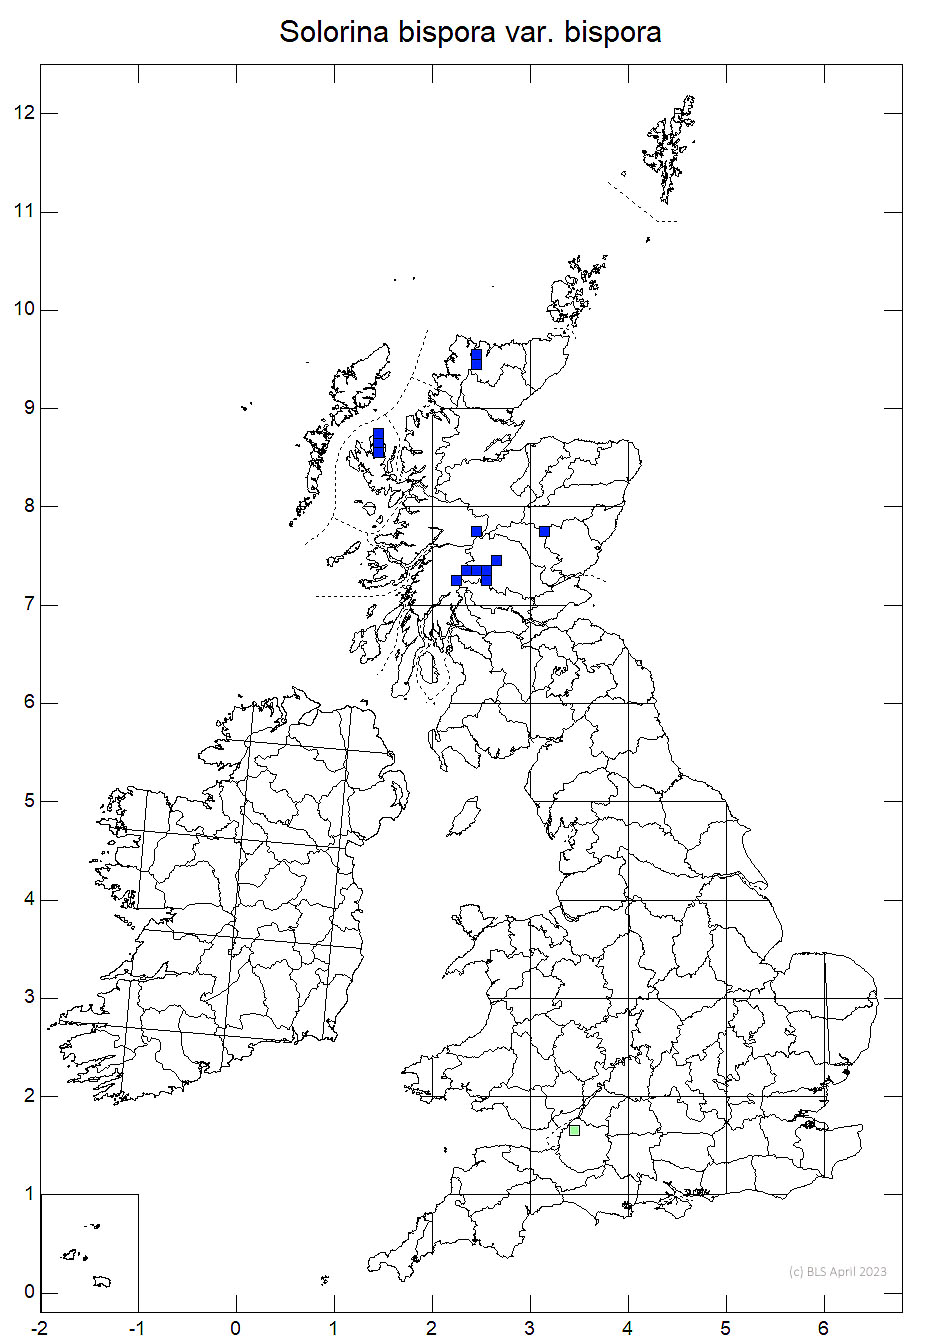 Solorina bispora var. bispora 10km sq distribution map